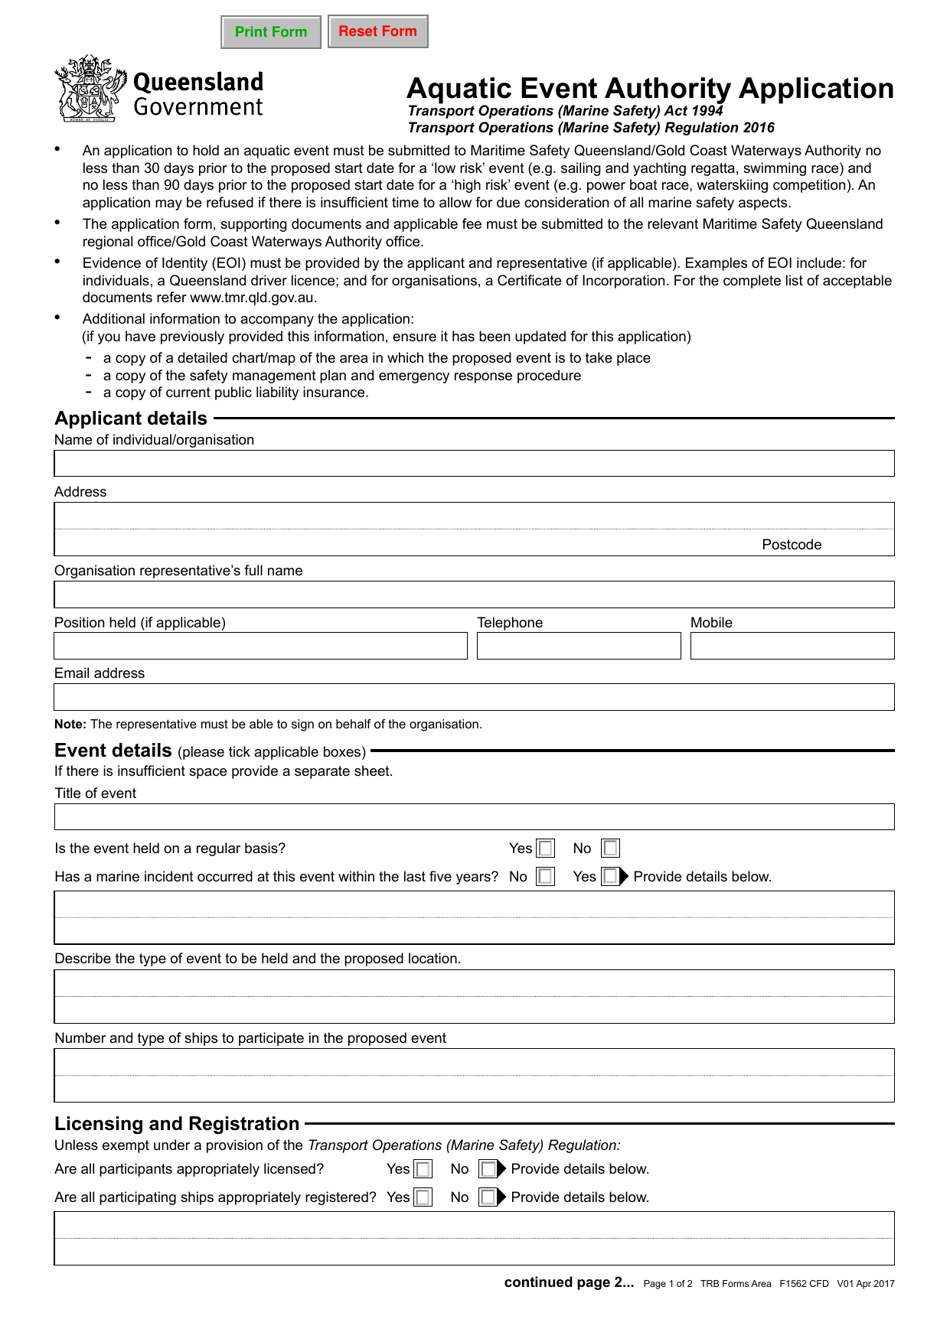 Form F1562 Aquatic Event Authority Application - Queensland, Australia, Page 1